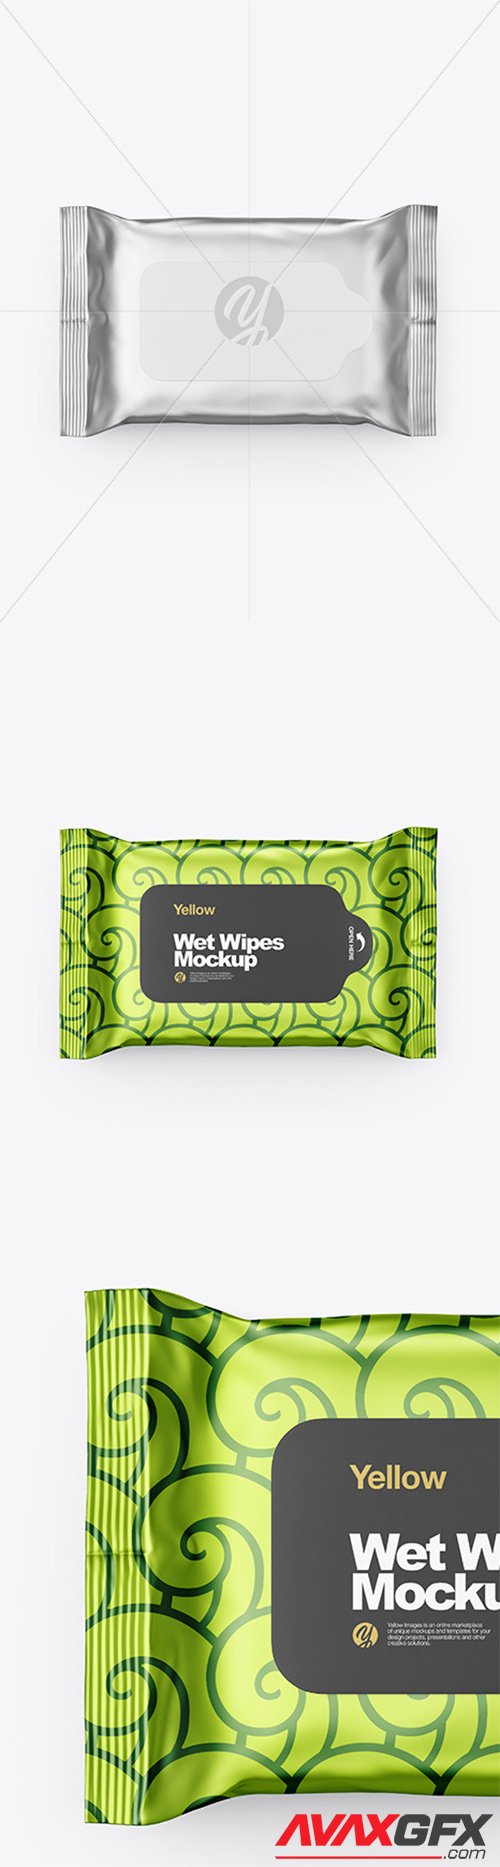 Download Metallic Wet Wipes Pack With Plastic Cap Mockup - Top View ...